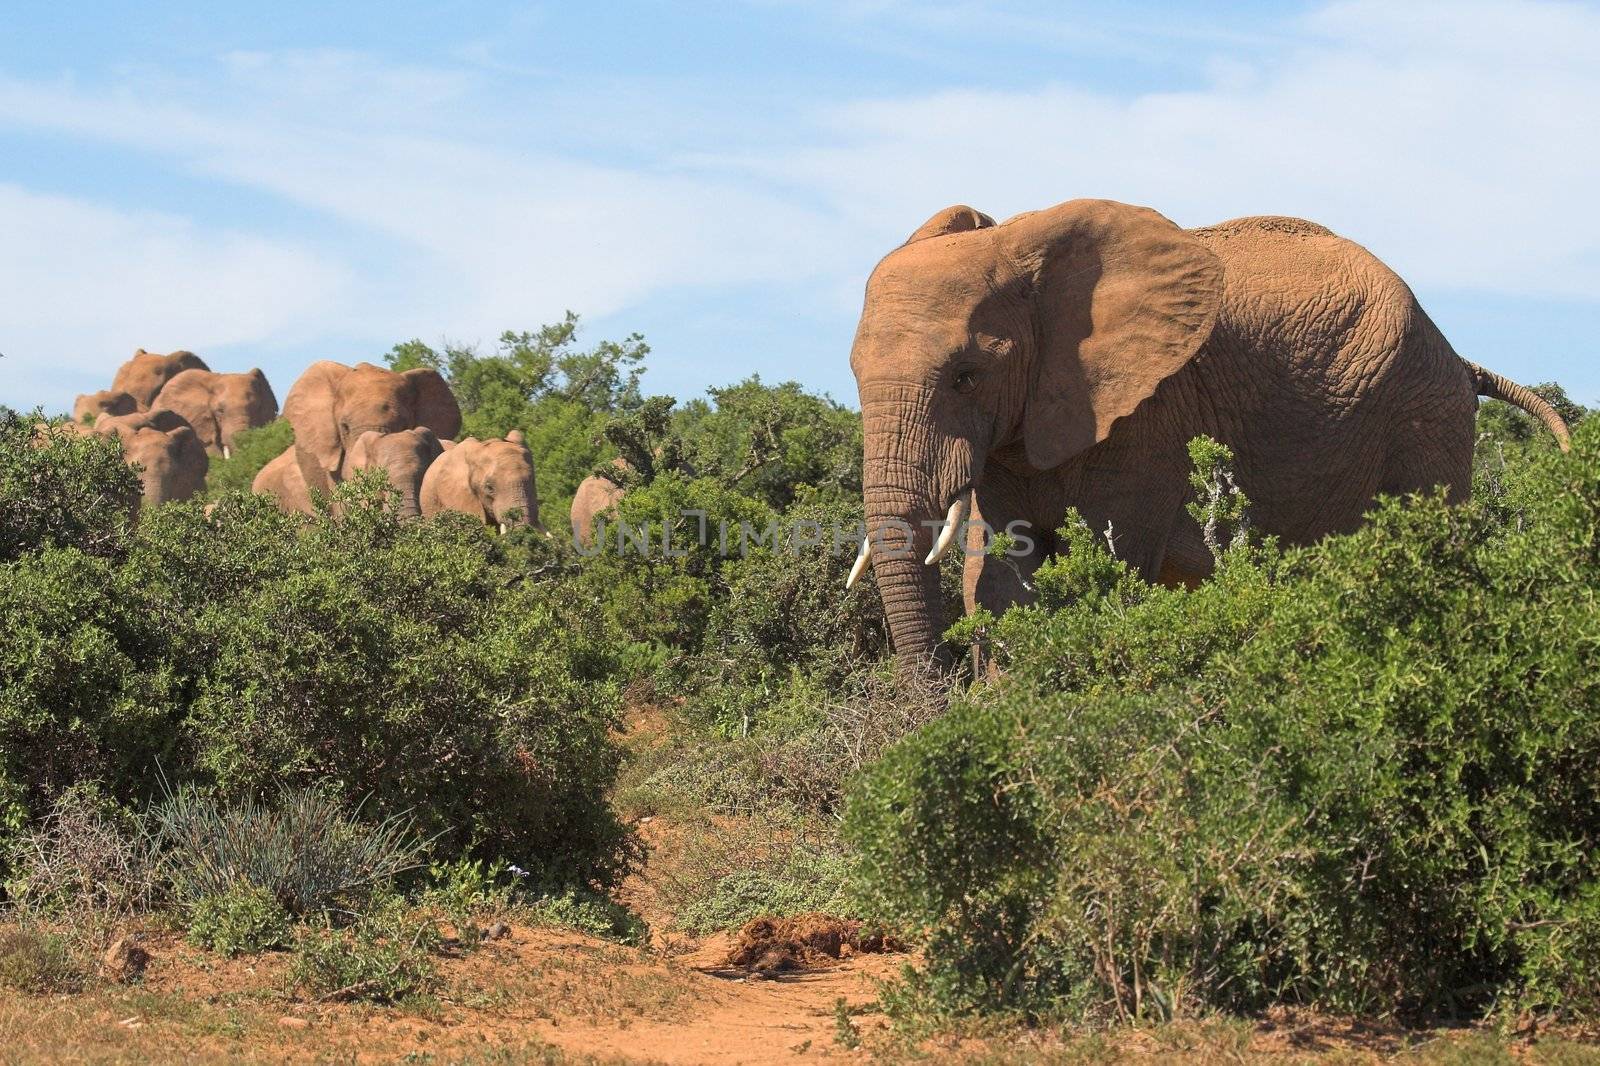 Herd of Elephants in the African Bush by nightowlza